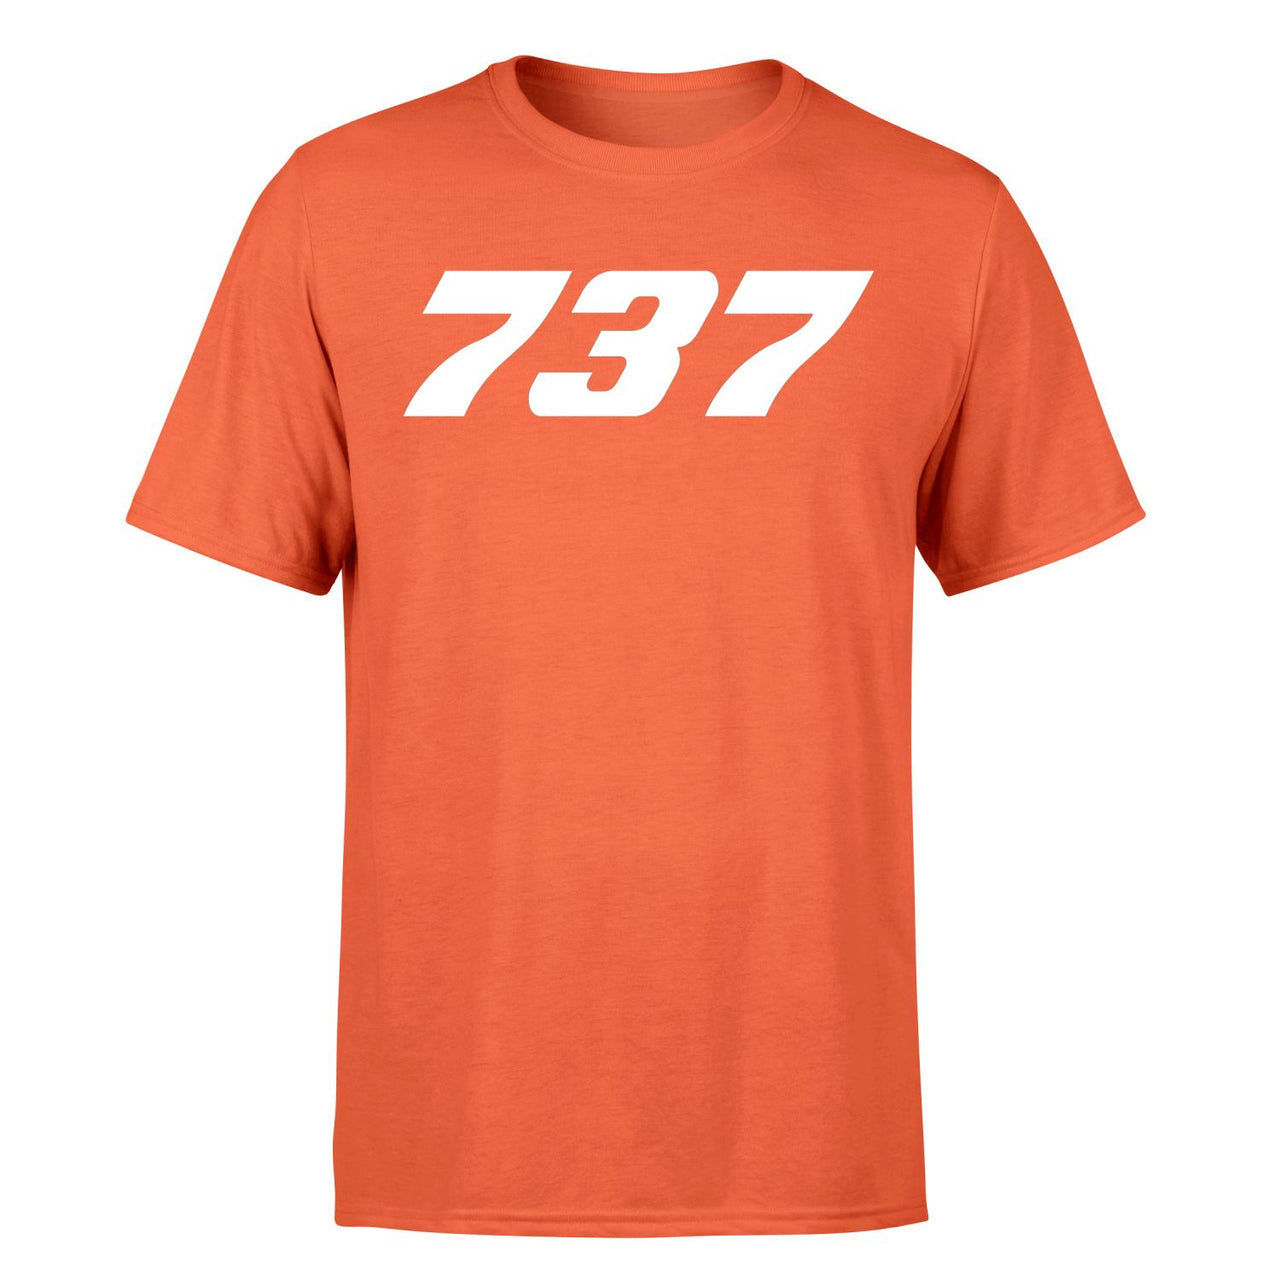 737 Flat Text Designed T-Shirts